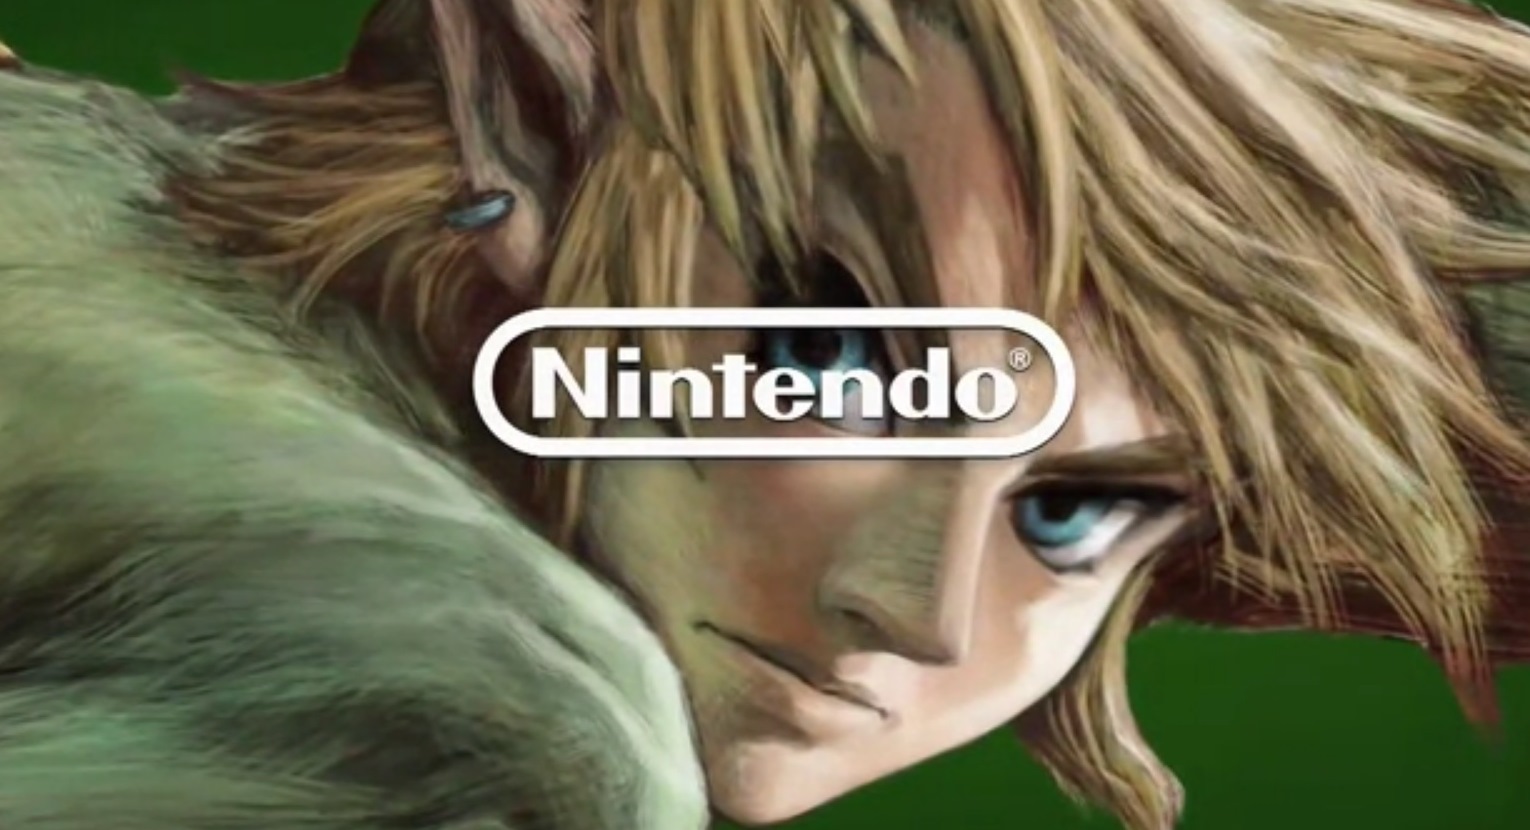 Eiji Aonuma says there are “no plans” for Zelda TotK DLC